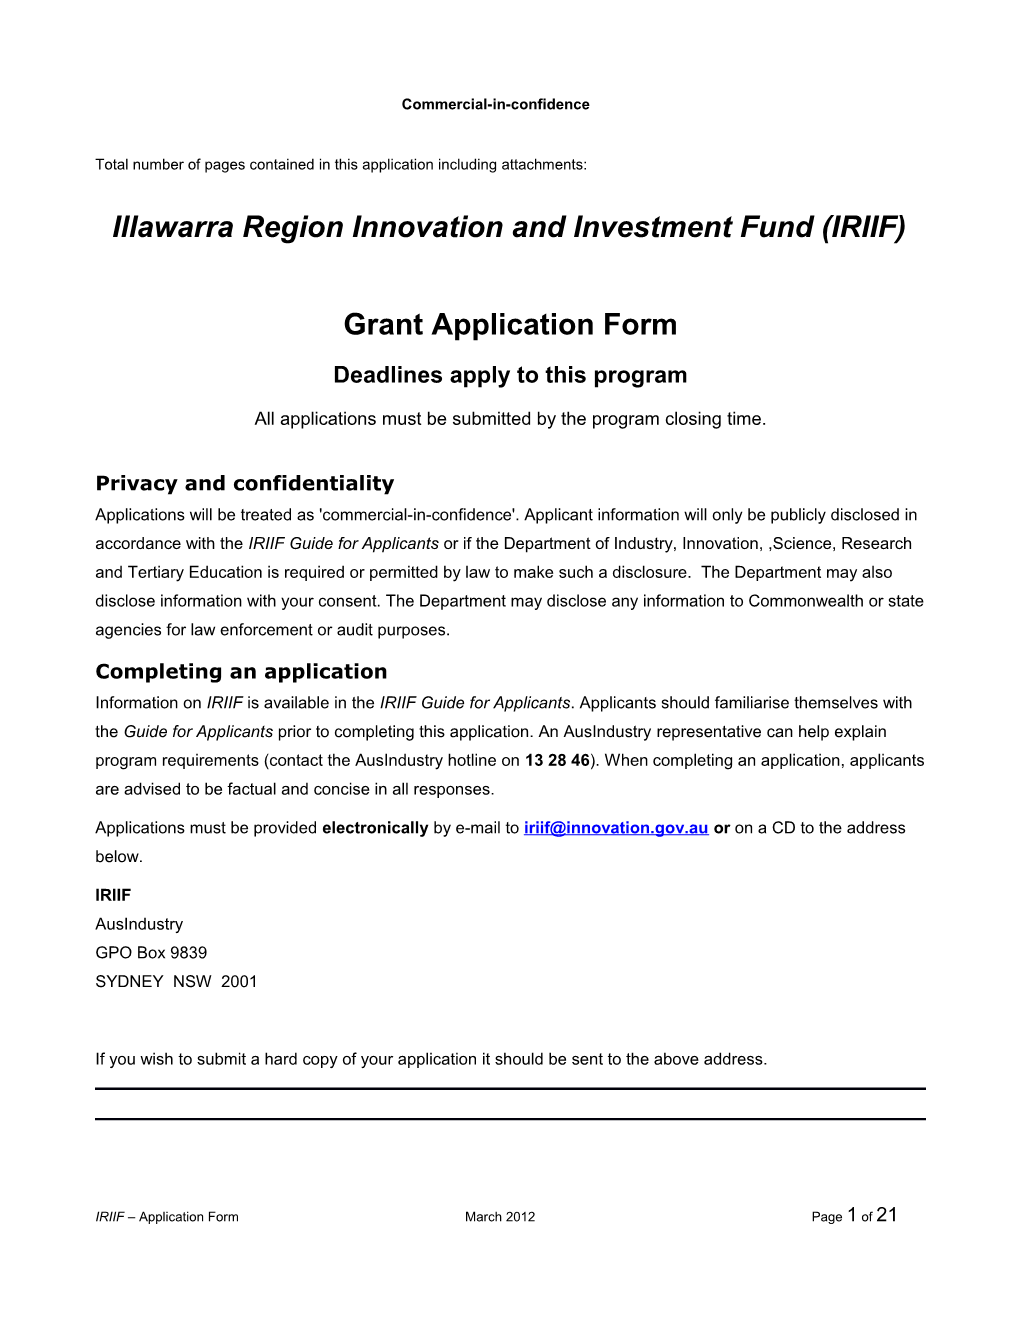 Illawarra Region Innovation and Investment Fund - Sample Application Form